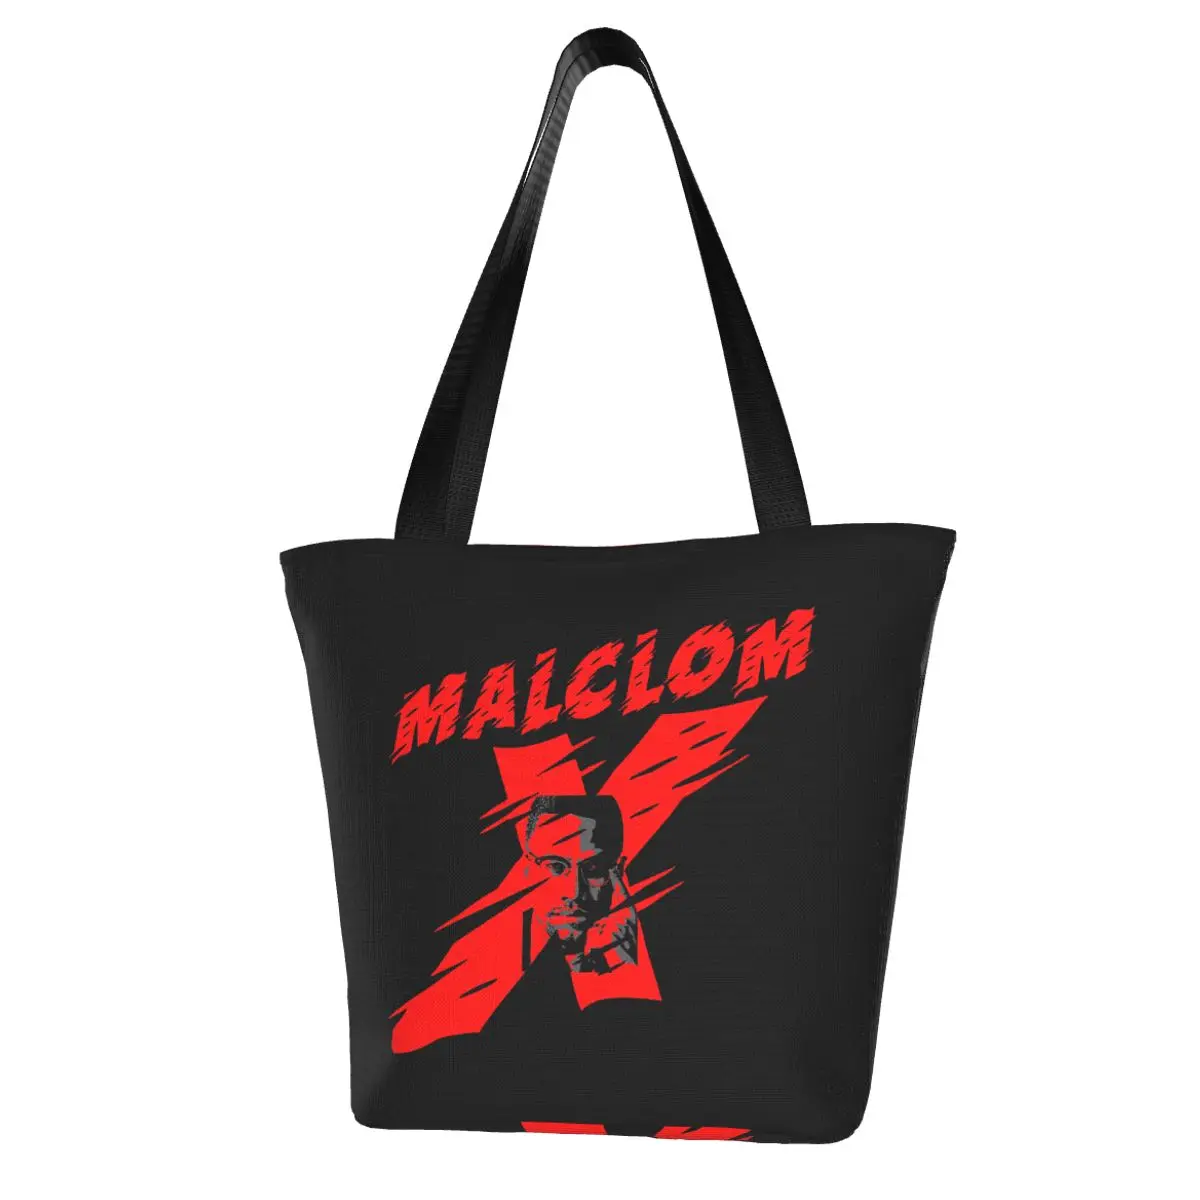 MALCOM X RED Shopping Bag Aesthetic Cloth Outdoor Handbag Female Fashion Bags